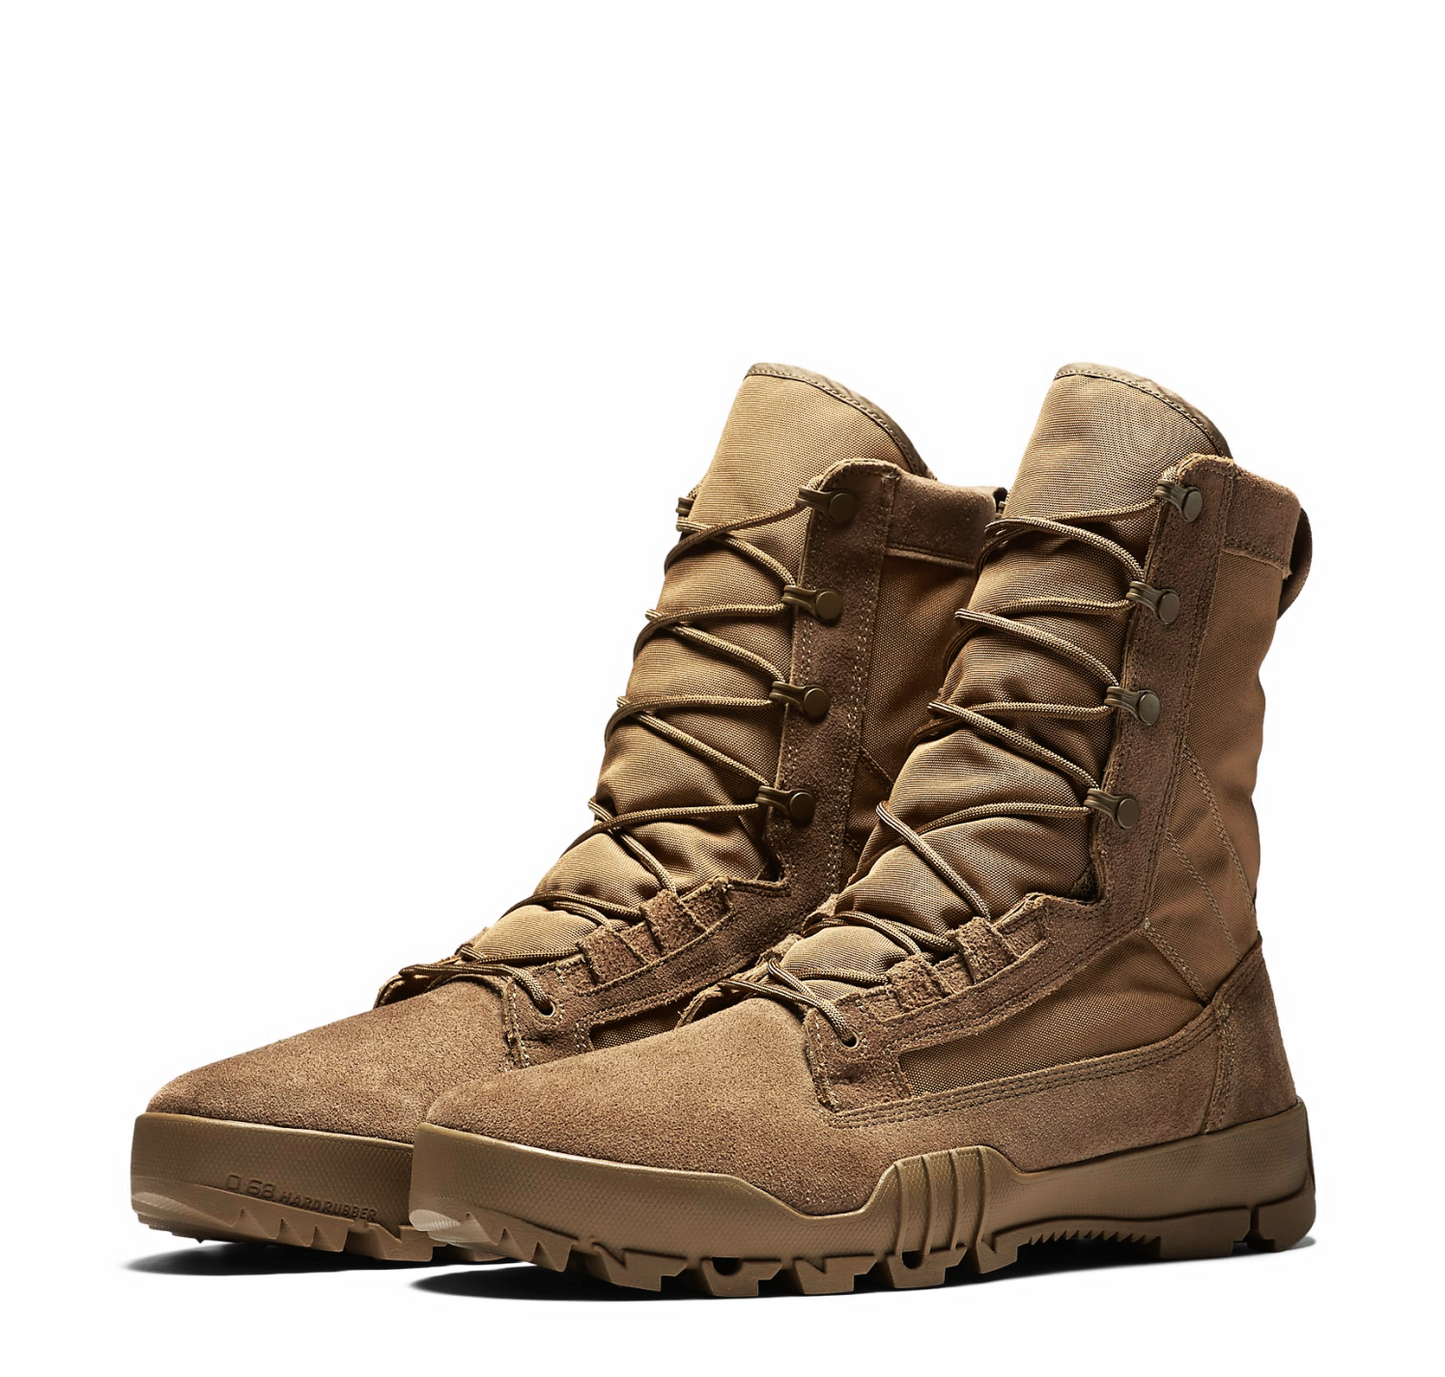 NIKE SFB JUNGLE 8" Leather Coyote Boots